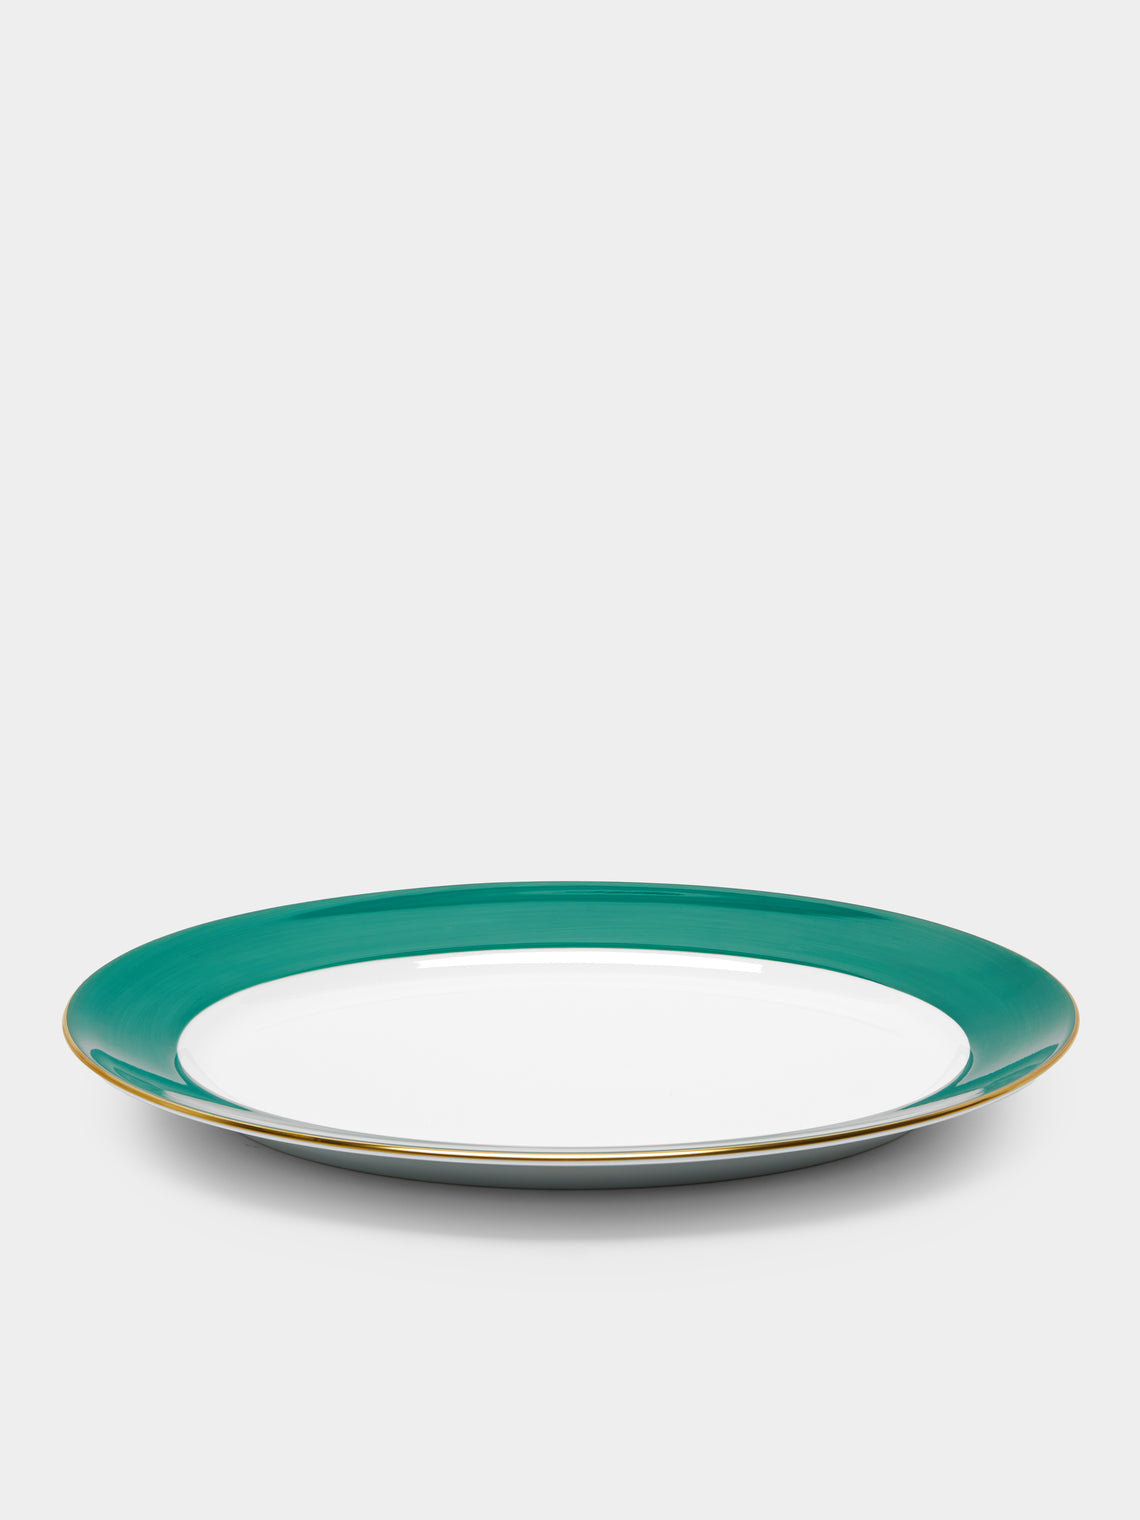 Robert Haviland & C. Parlon - Coco Hand-Painted Porcelain Large Oval Serving Platter -  - ABASK